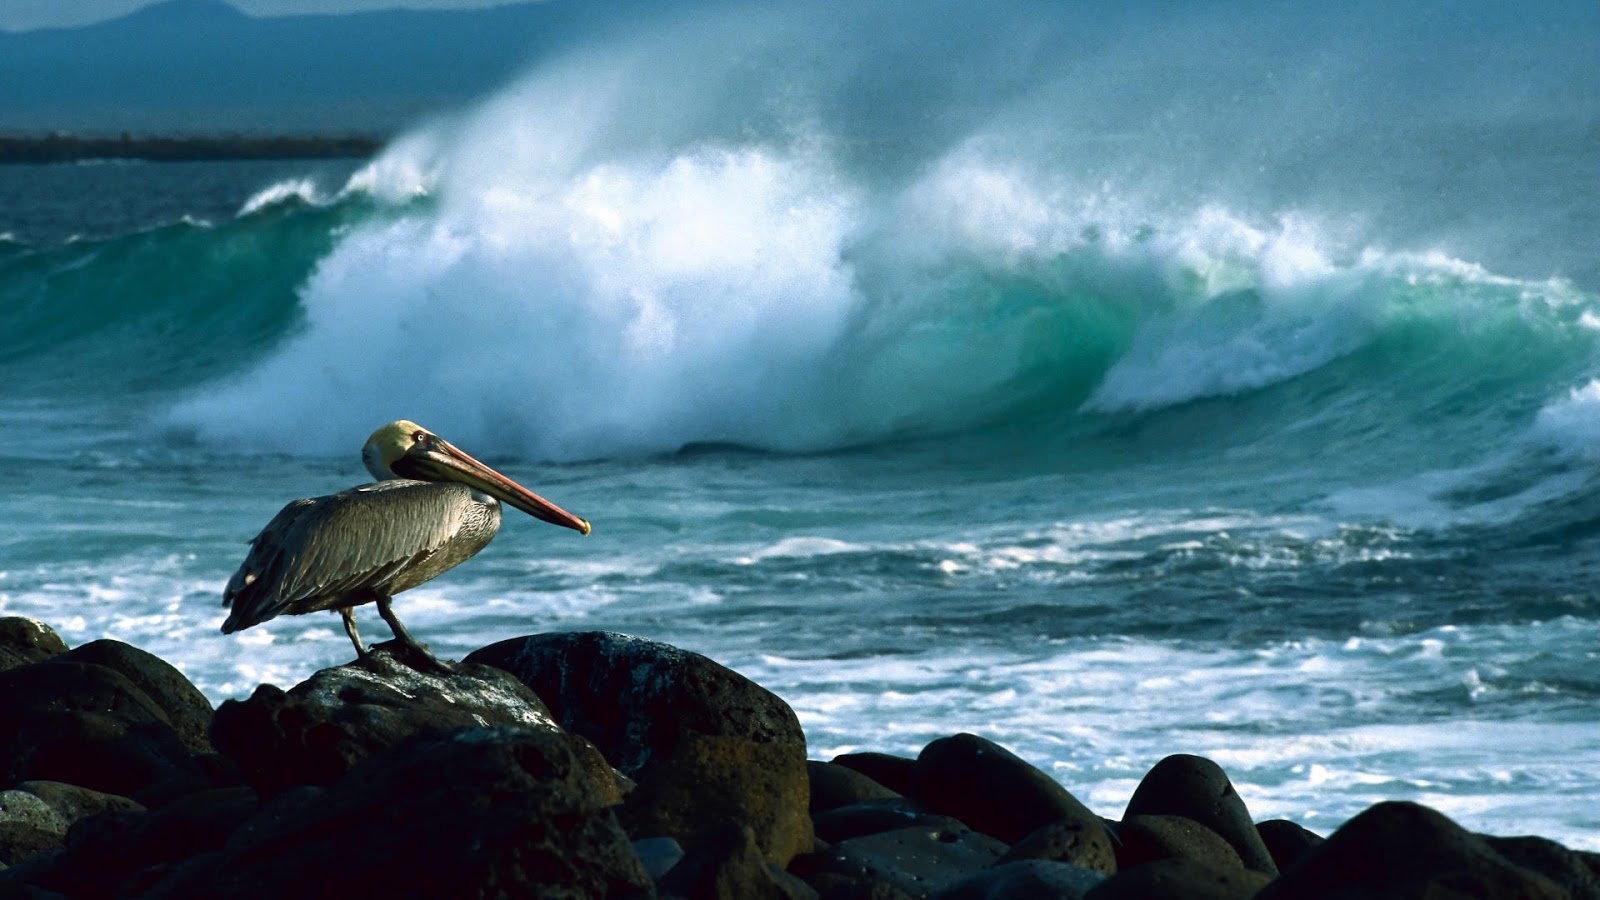 Pelican and wave.jpg